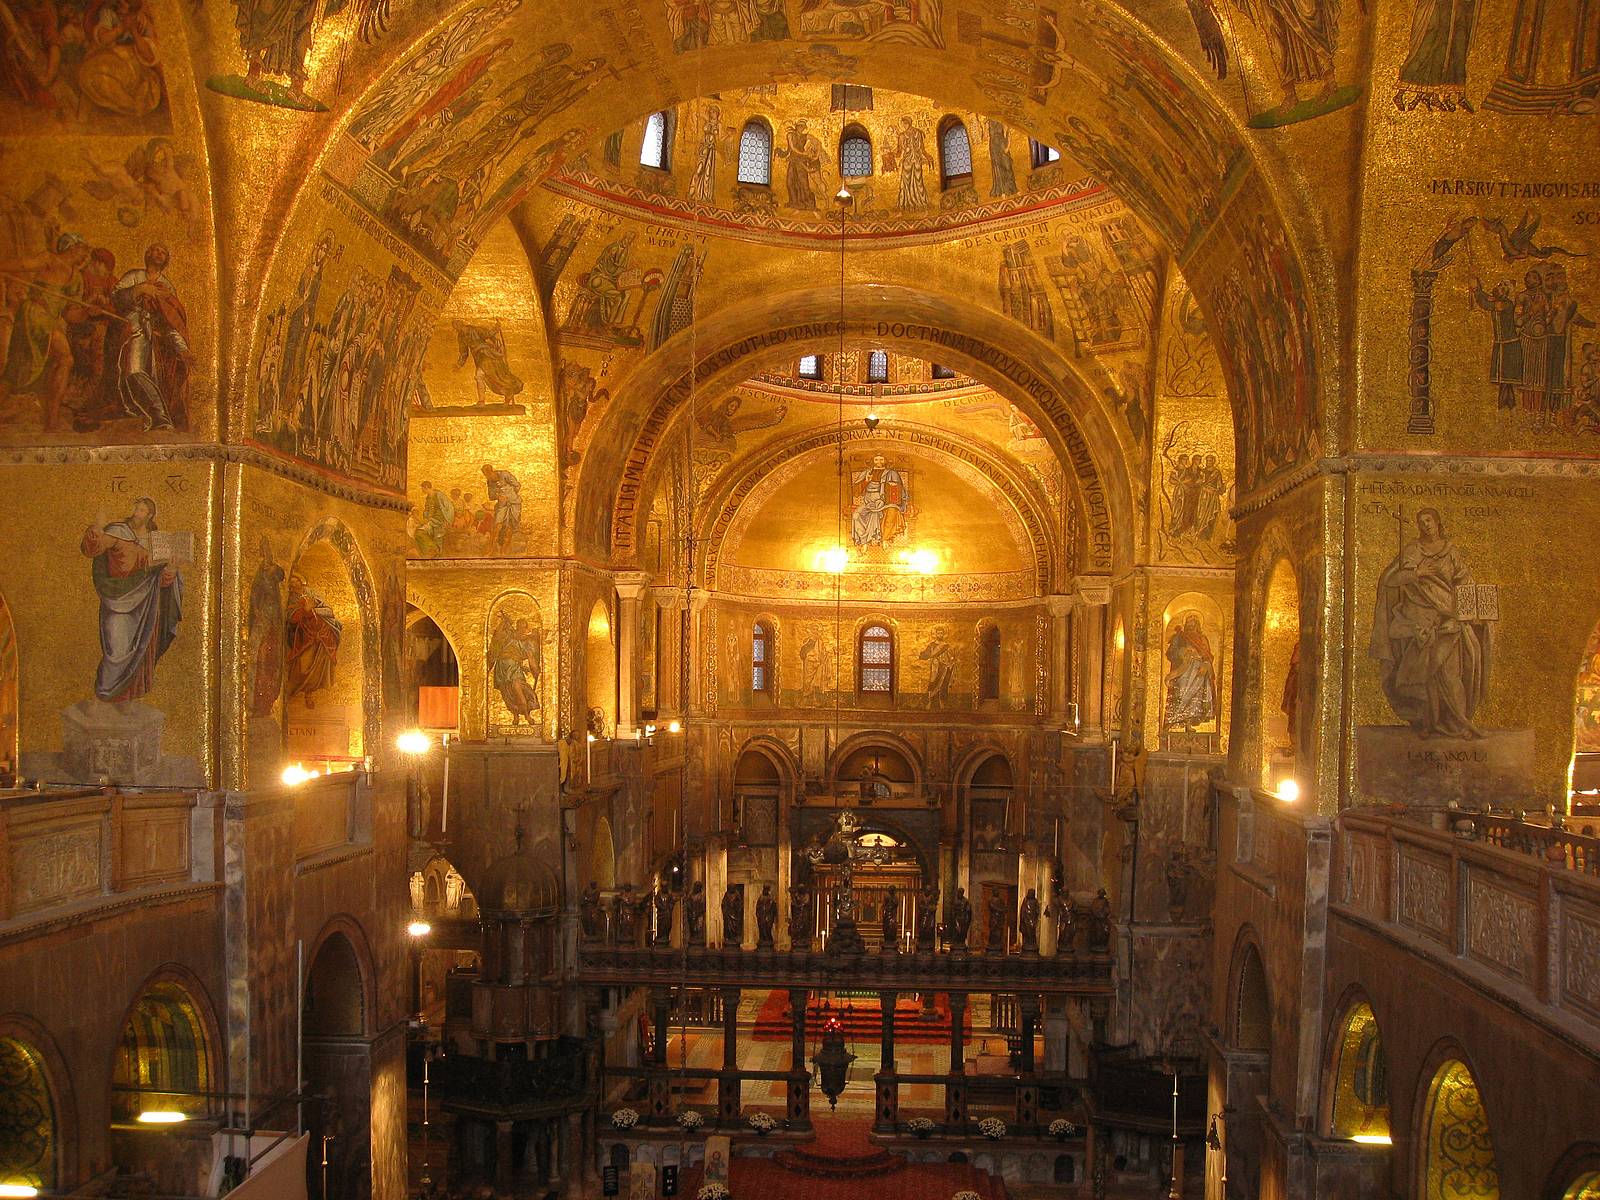 http://www.mimifroufrou.com/scentedsalamander/images/Venice_church_San_Marco_gold_Byzantine_style.jpg